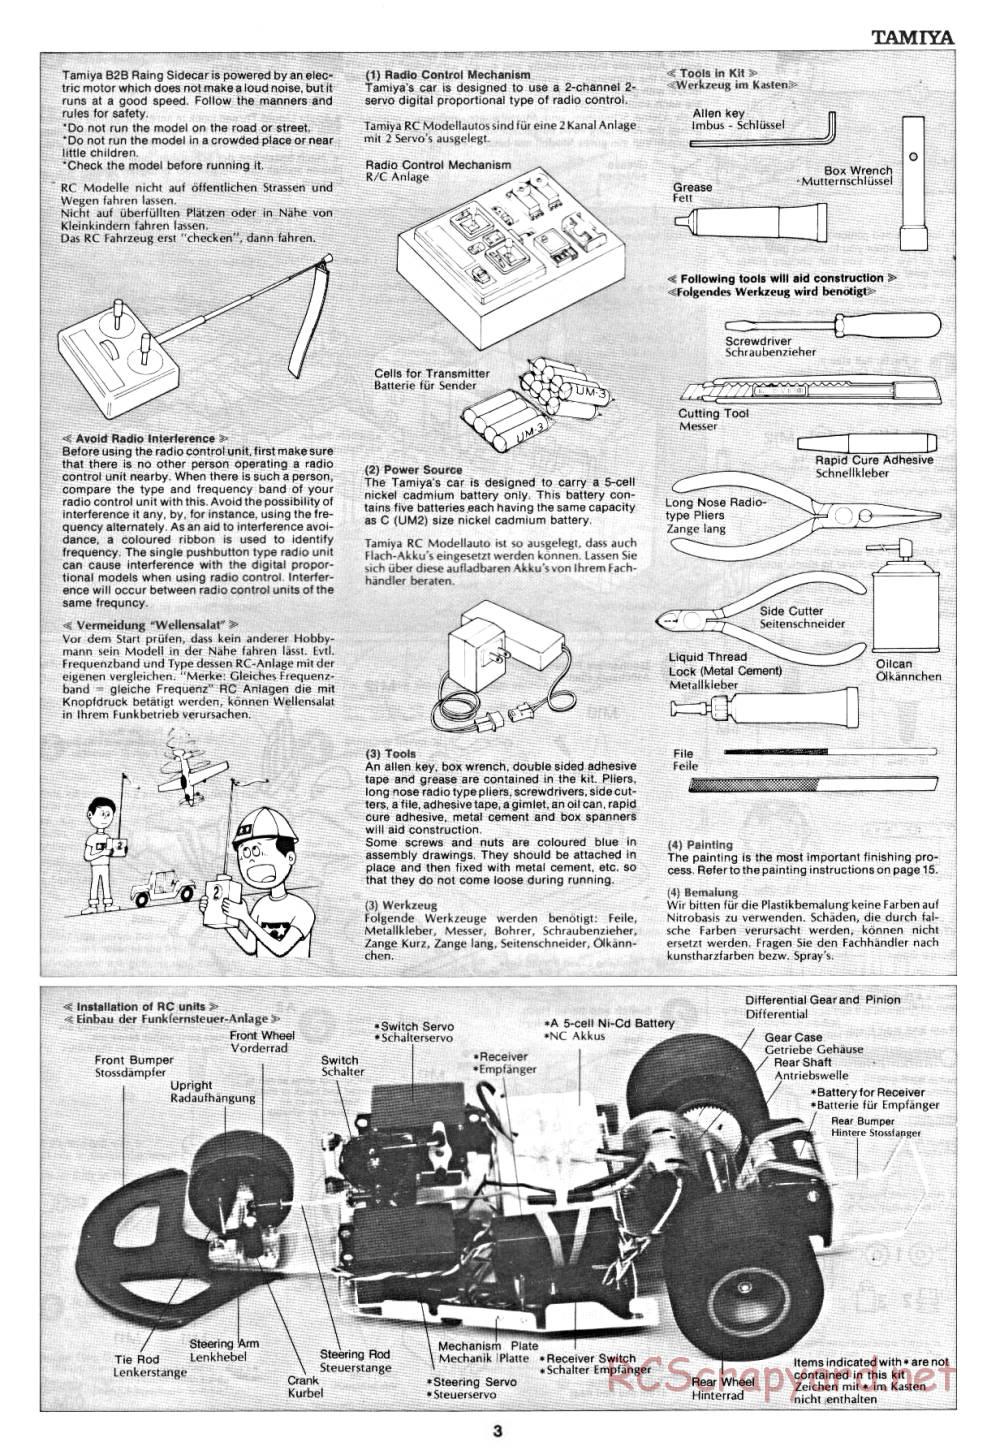 Tamiya - B2B Racing Sidecar - 58017 - Manual - Page 3